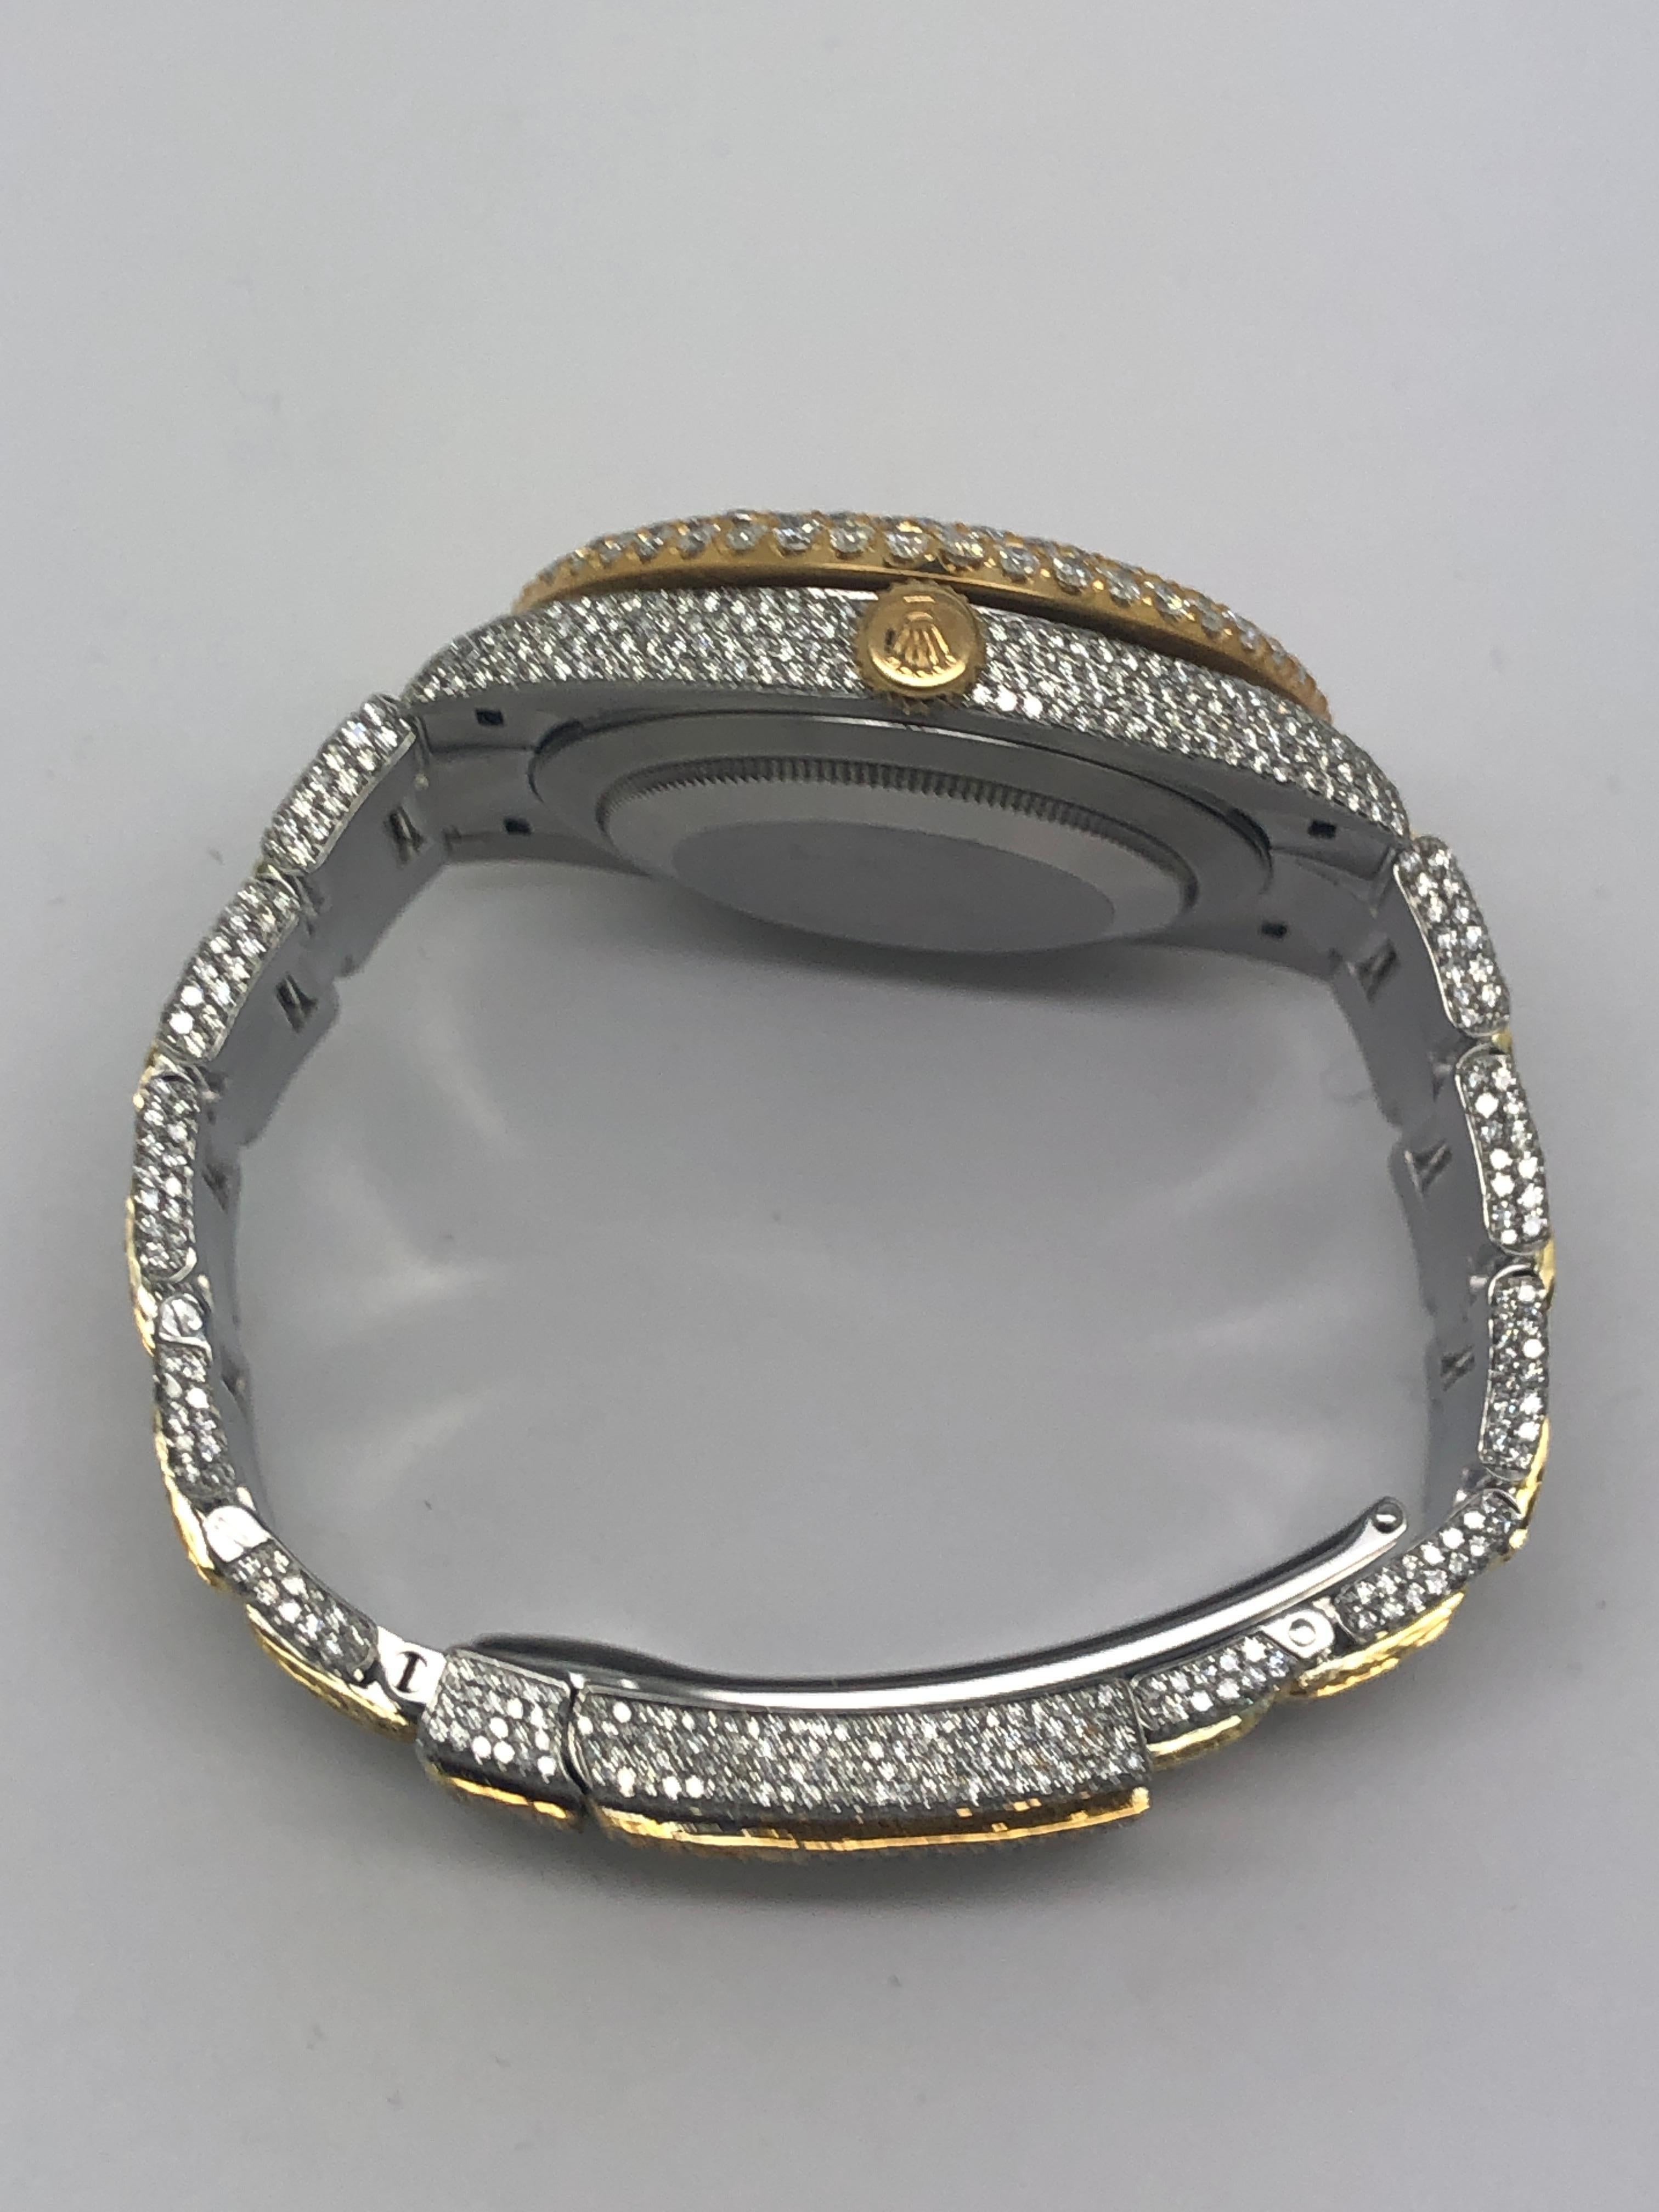 Custom Iced Out Emerald Cut Diamonds Rolex Datejust Wrist Watch For Sale 2